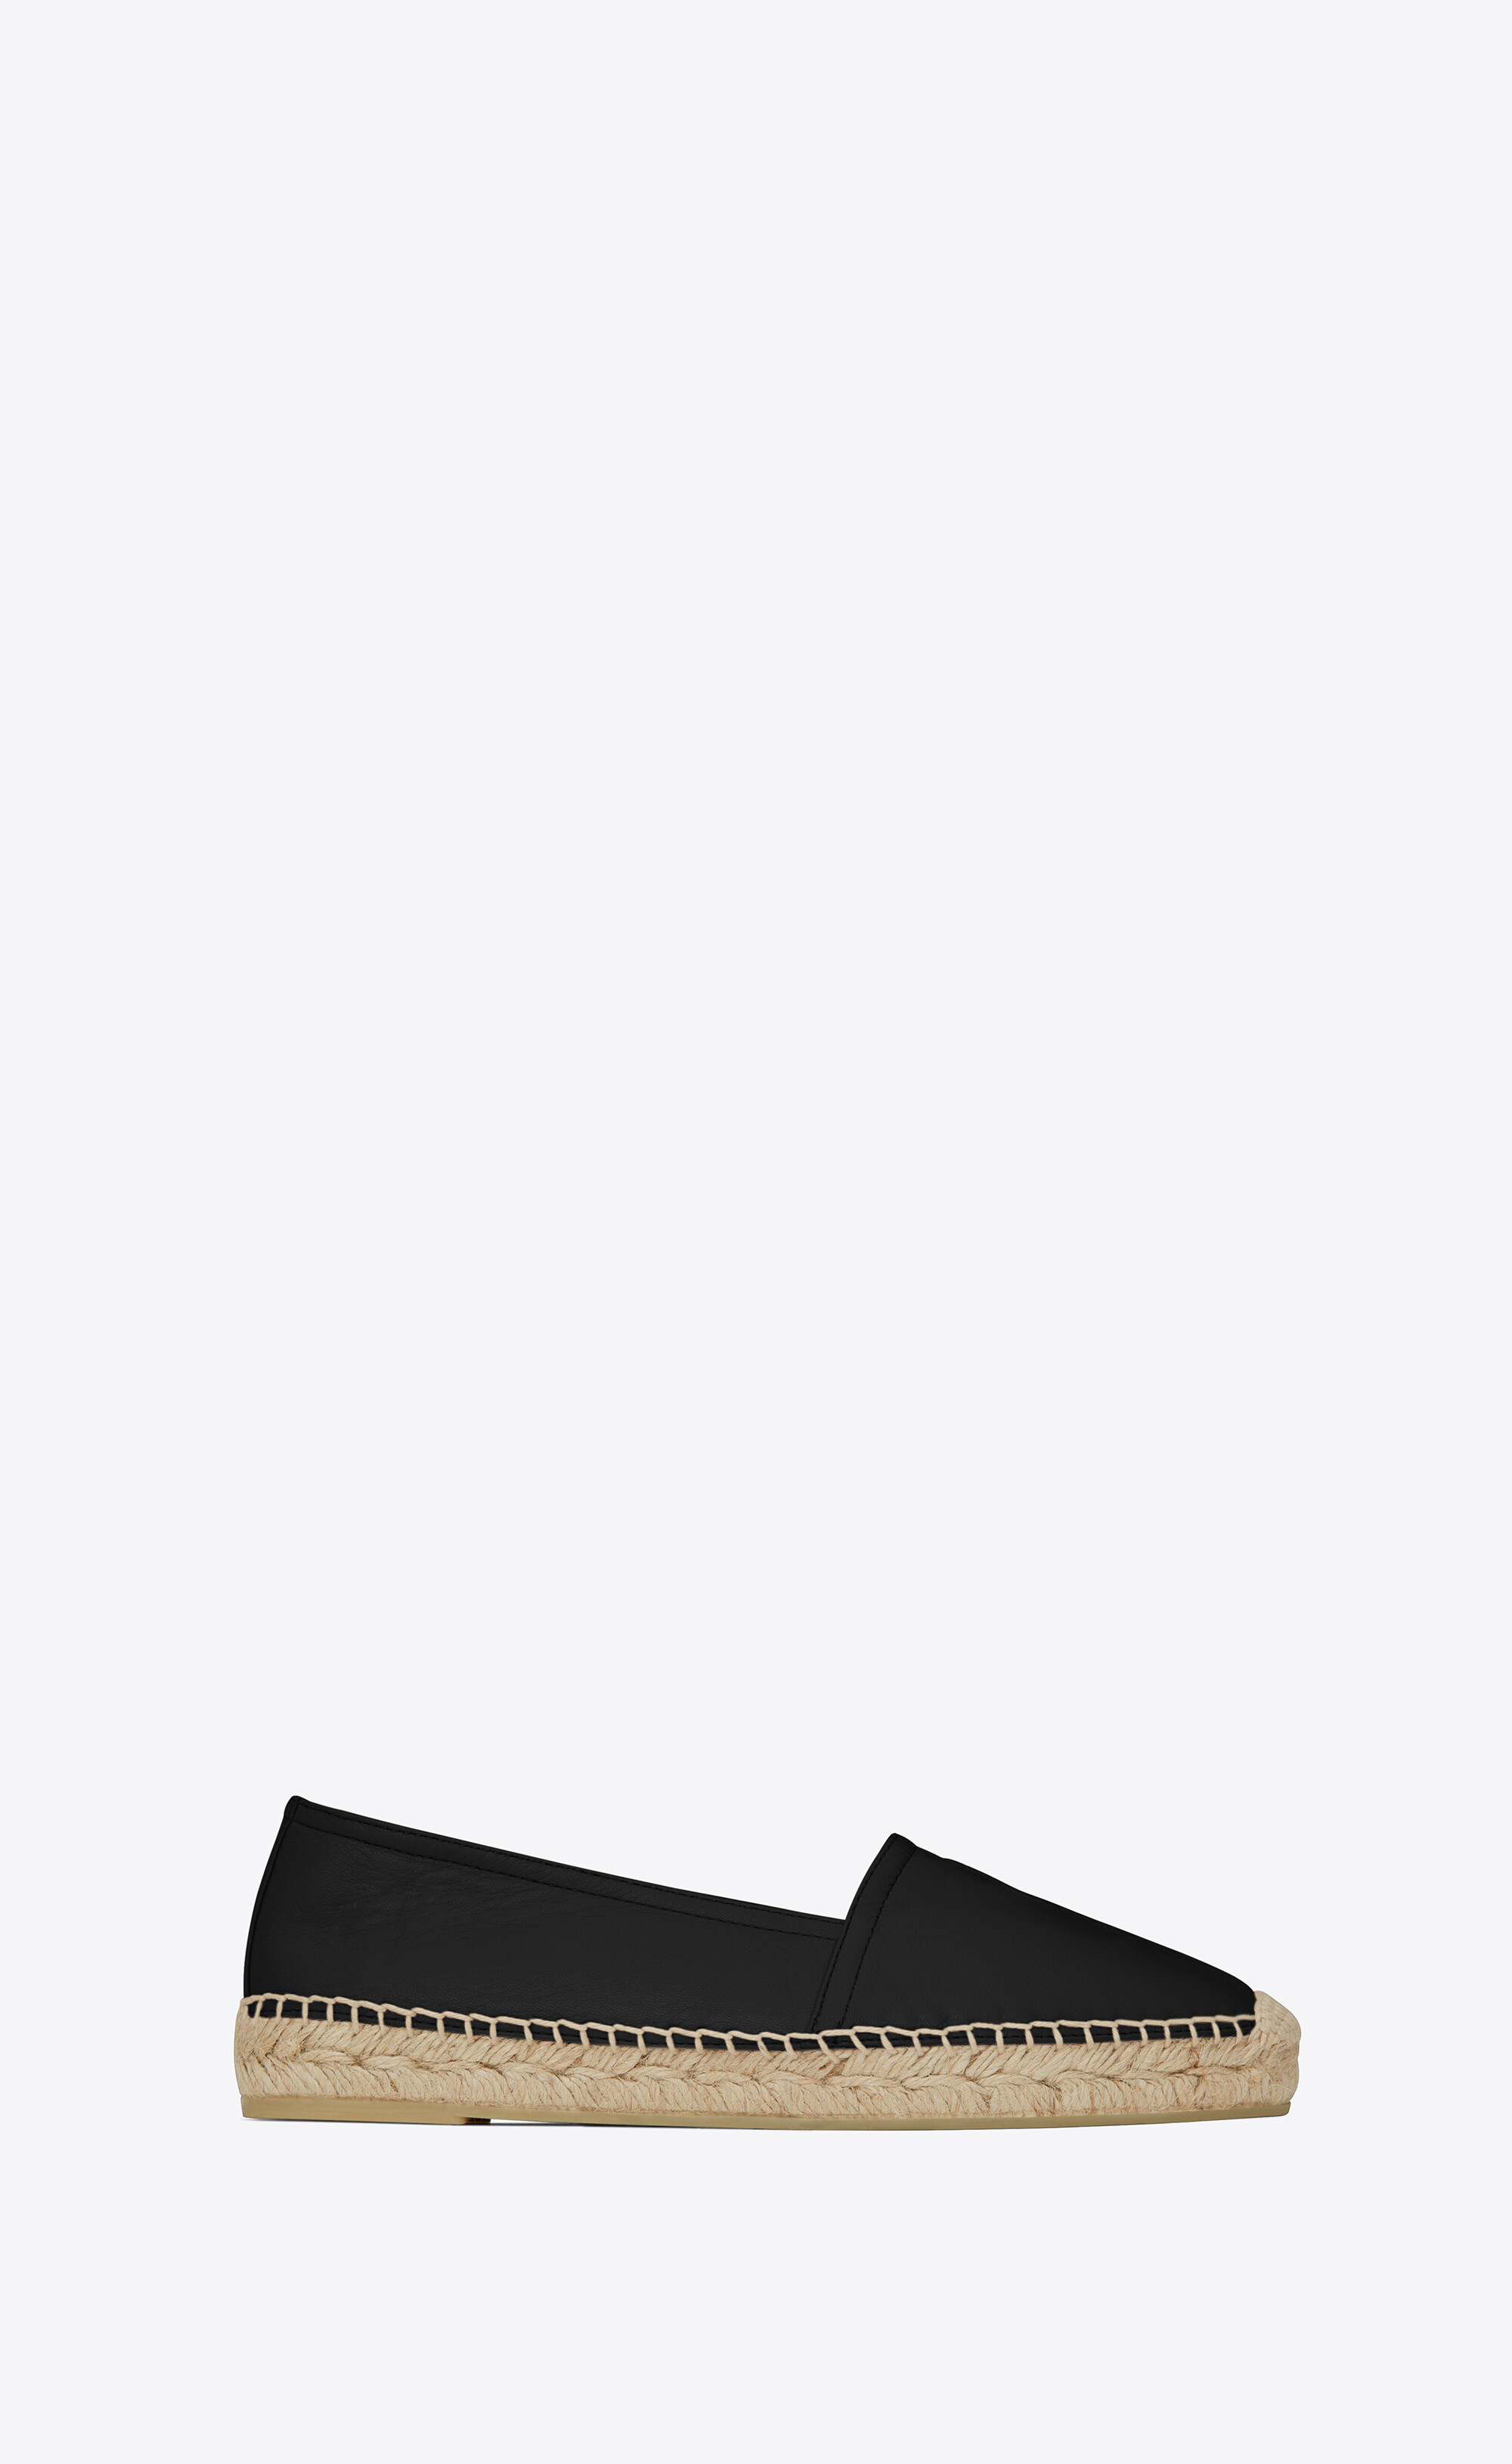 Yves Saint Laurent, Shoes, Ysl Black Leather Logo Espadrille